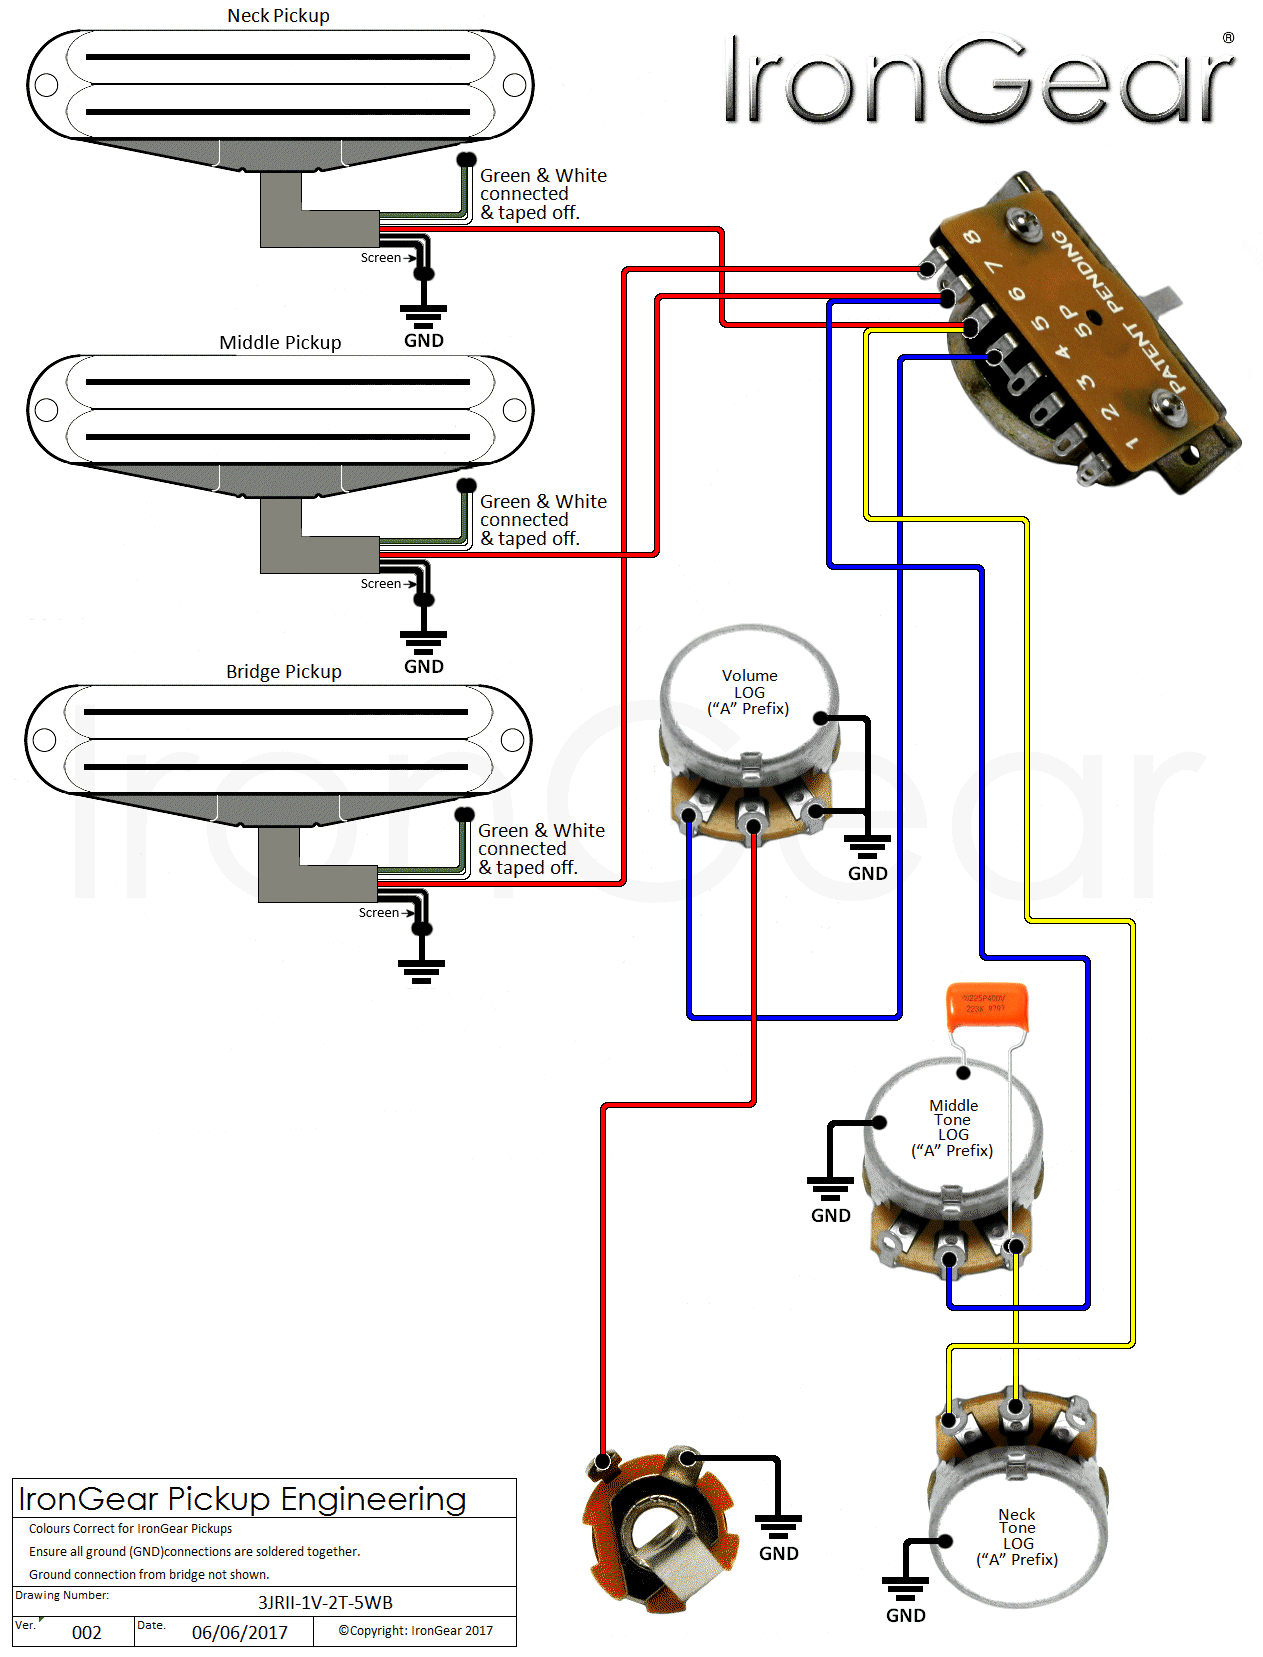 1 vol 1 tone 5 way hss active wiring diagram